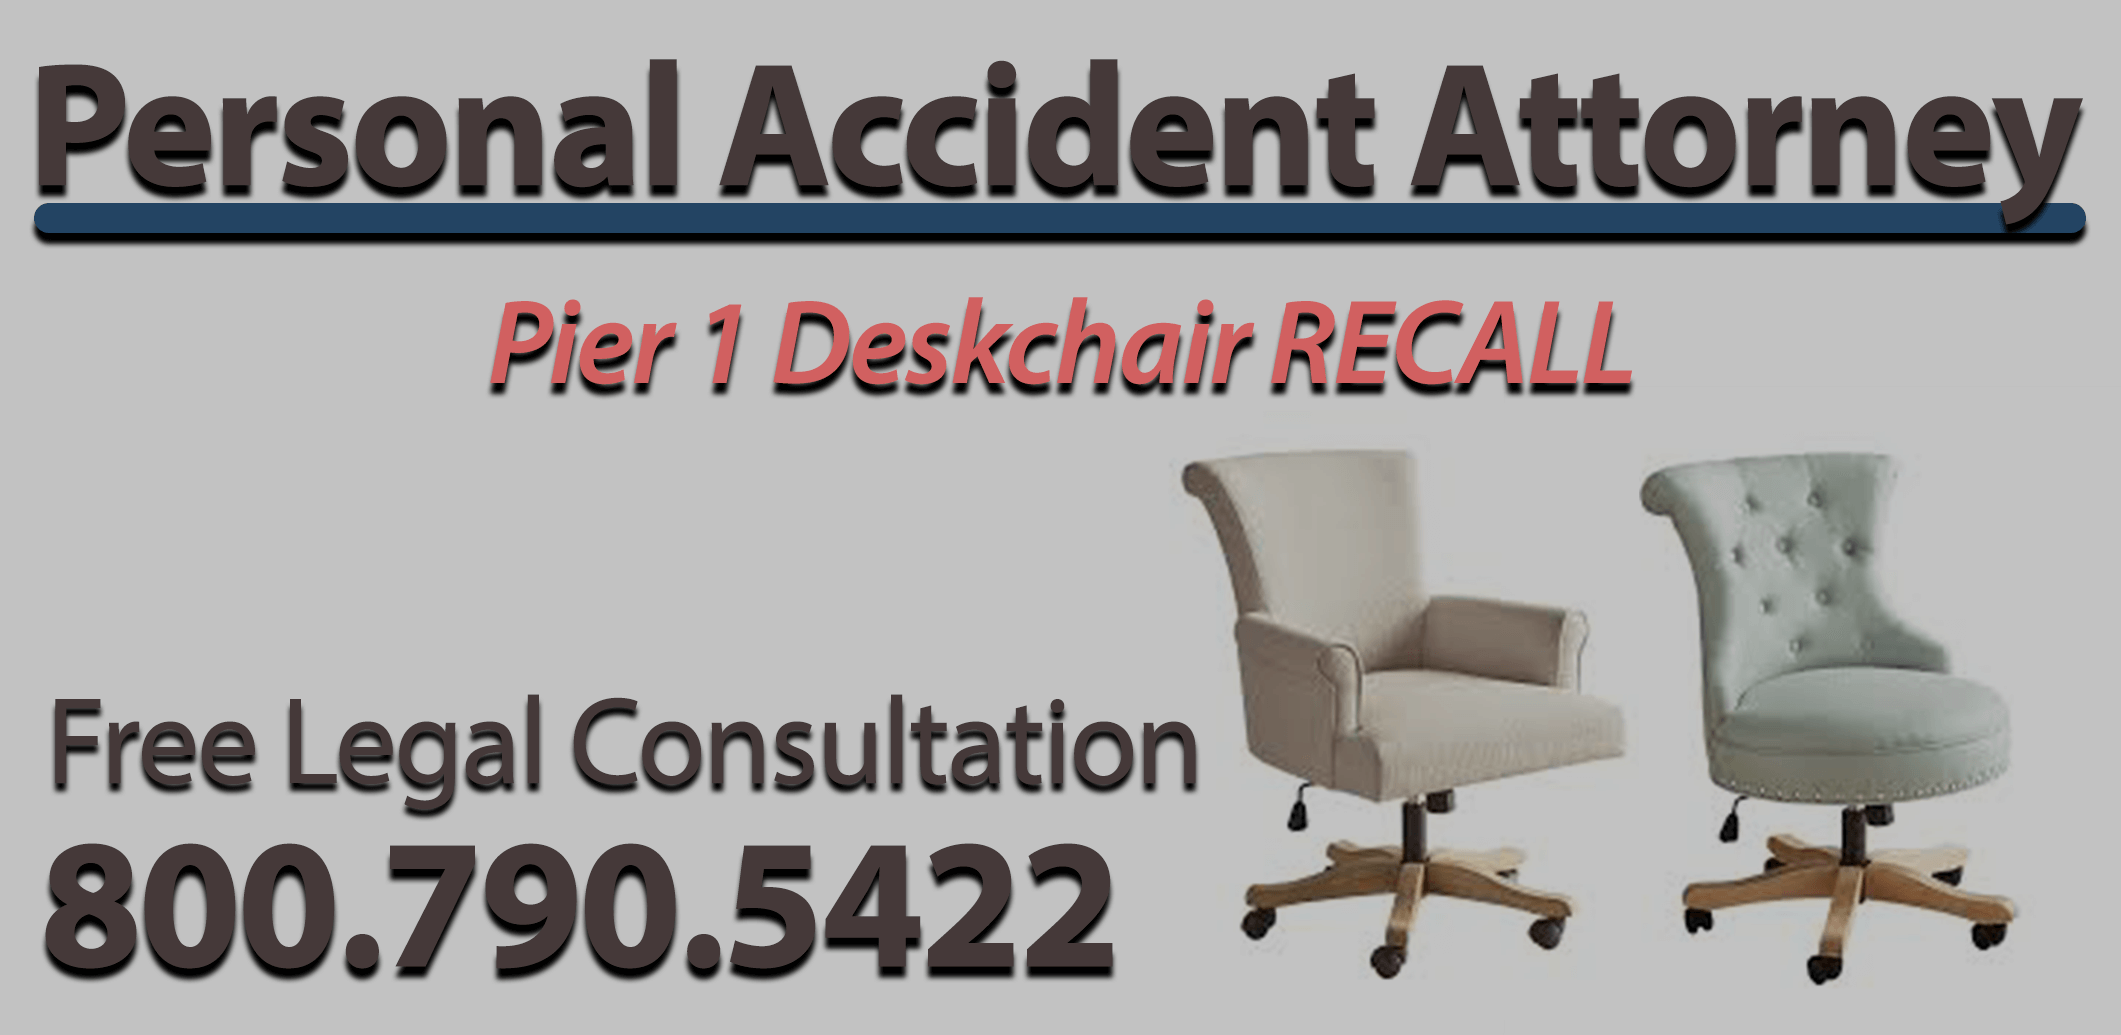 pier-1 deskchair recall fall risk hazard legs break personal injury lawyer free consultation 